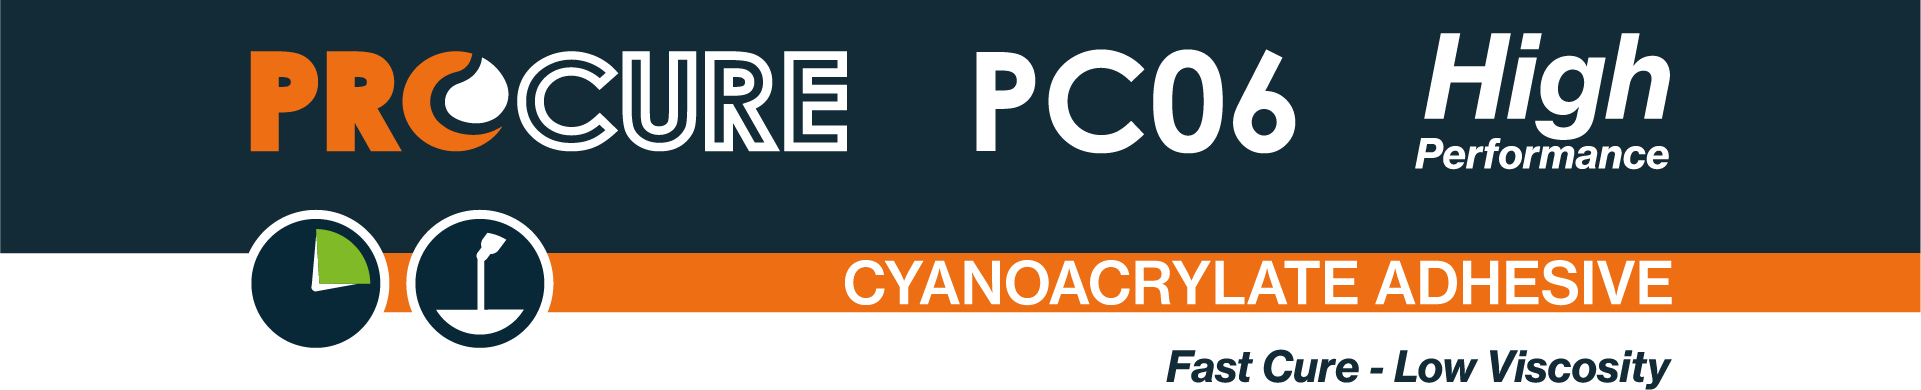 Procure PC06 High Performance Cyanoacrylate Adhesive Banner Image.